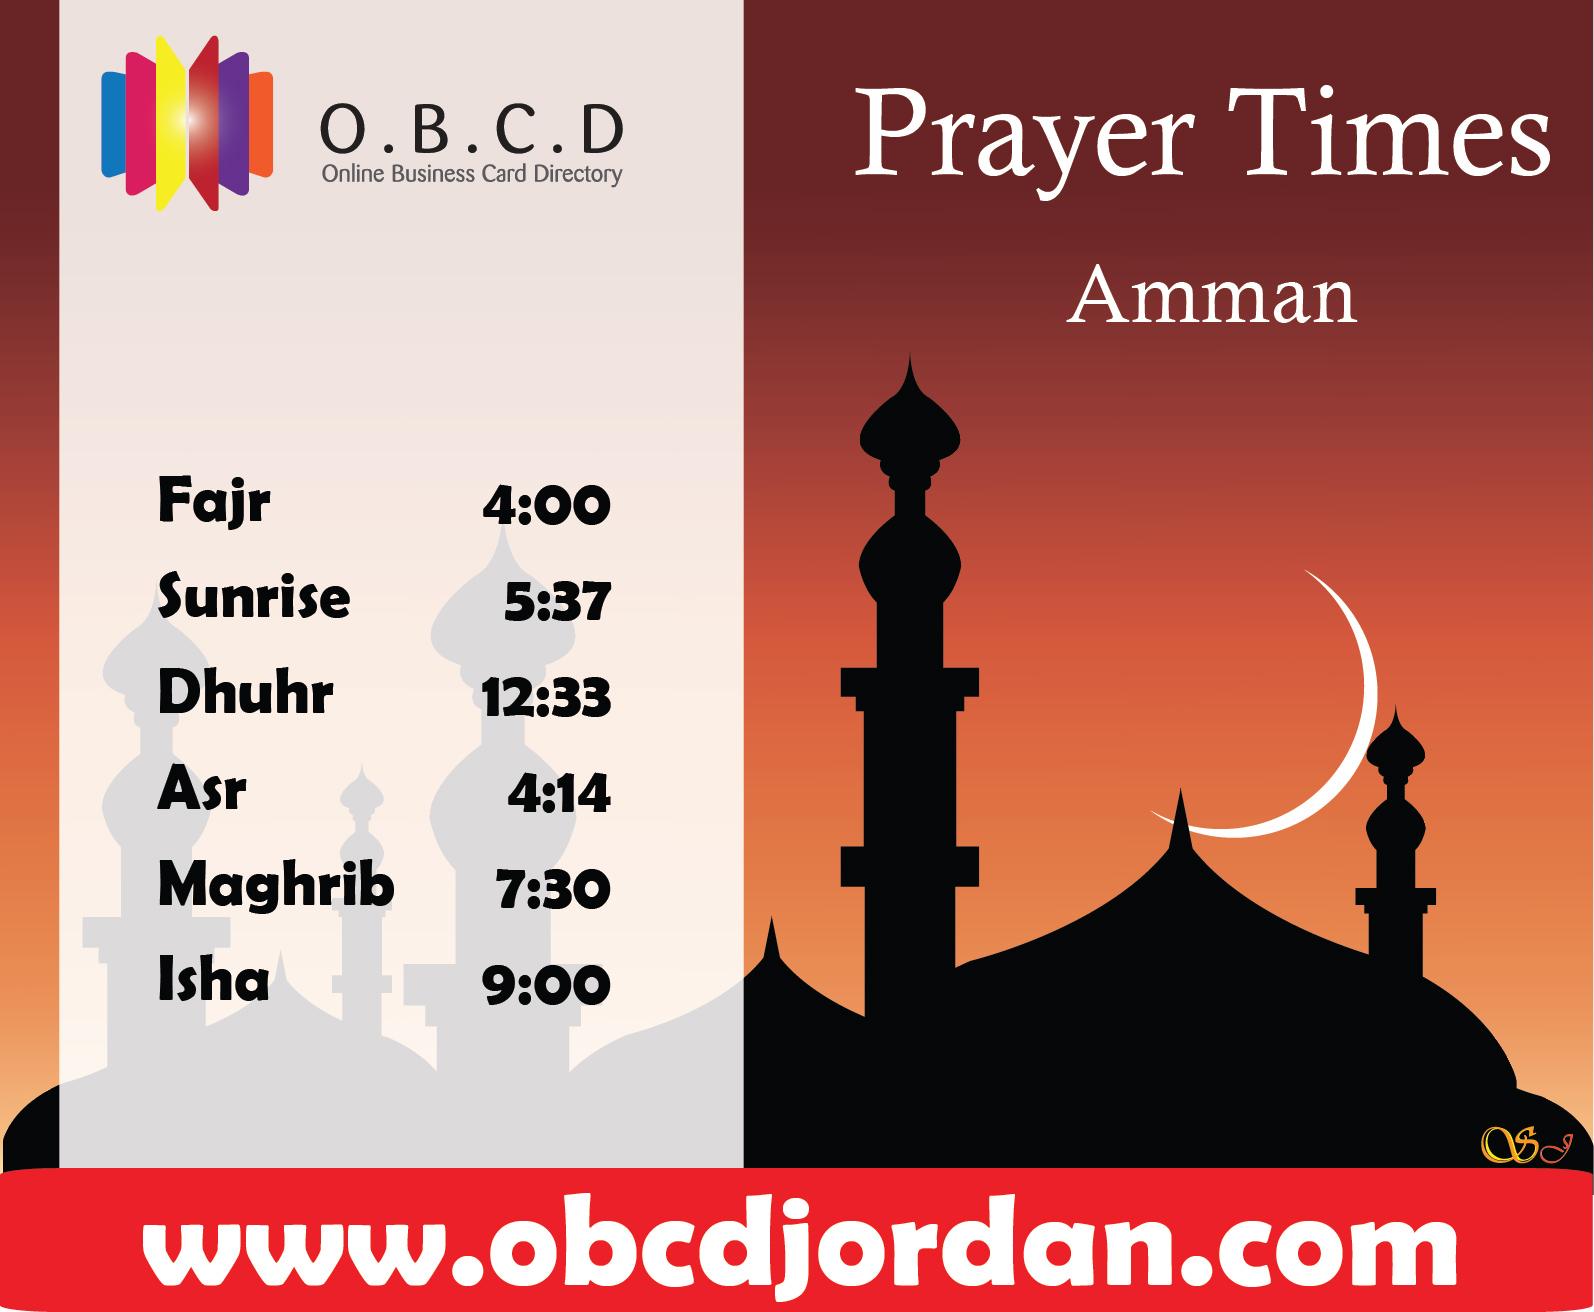 Twitter: "#prayer #times #amman #jordan #amman #lovejo http://t.co/6nqznYrYfI" / Twitter